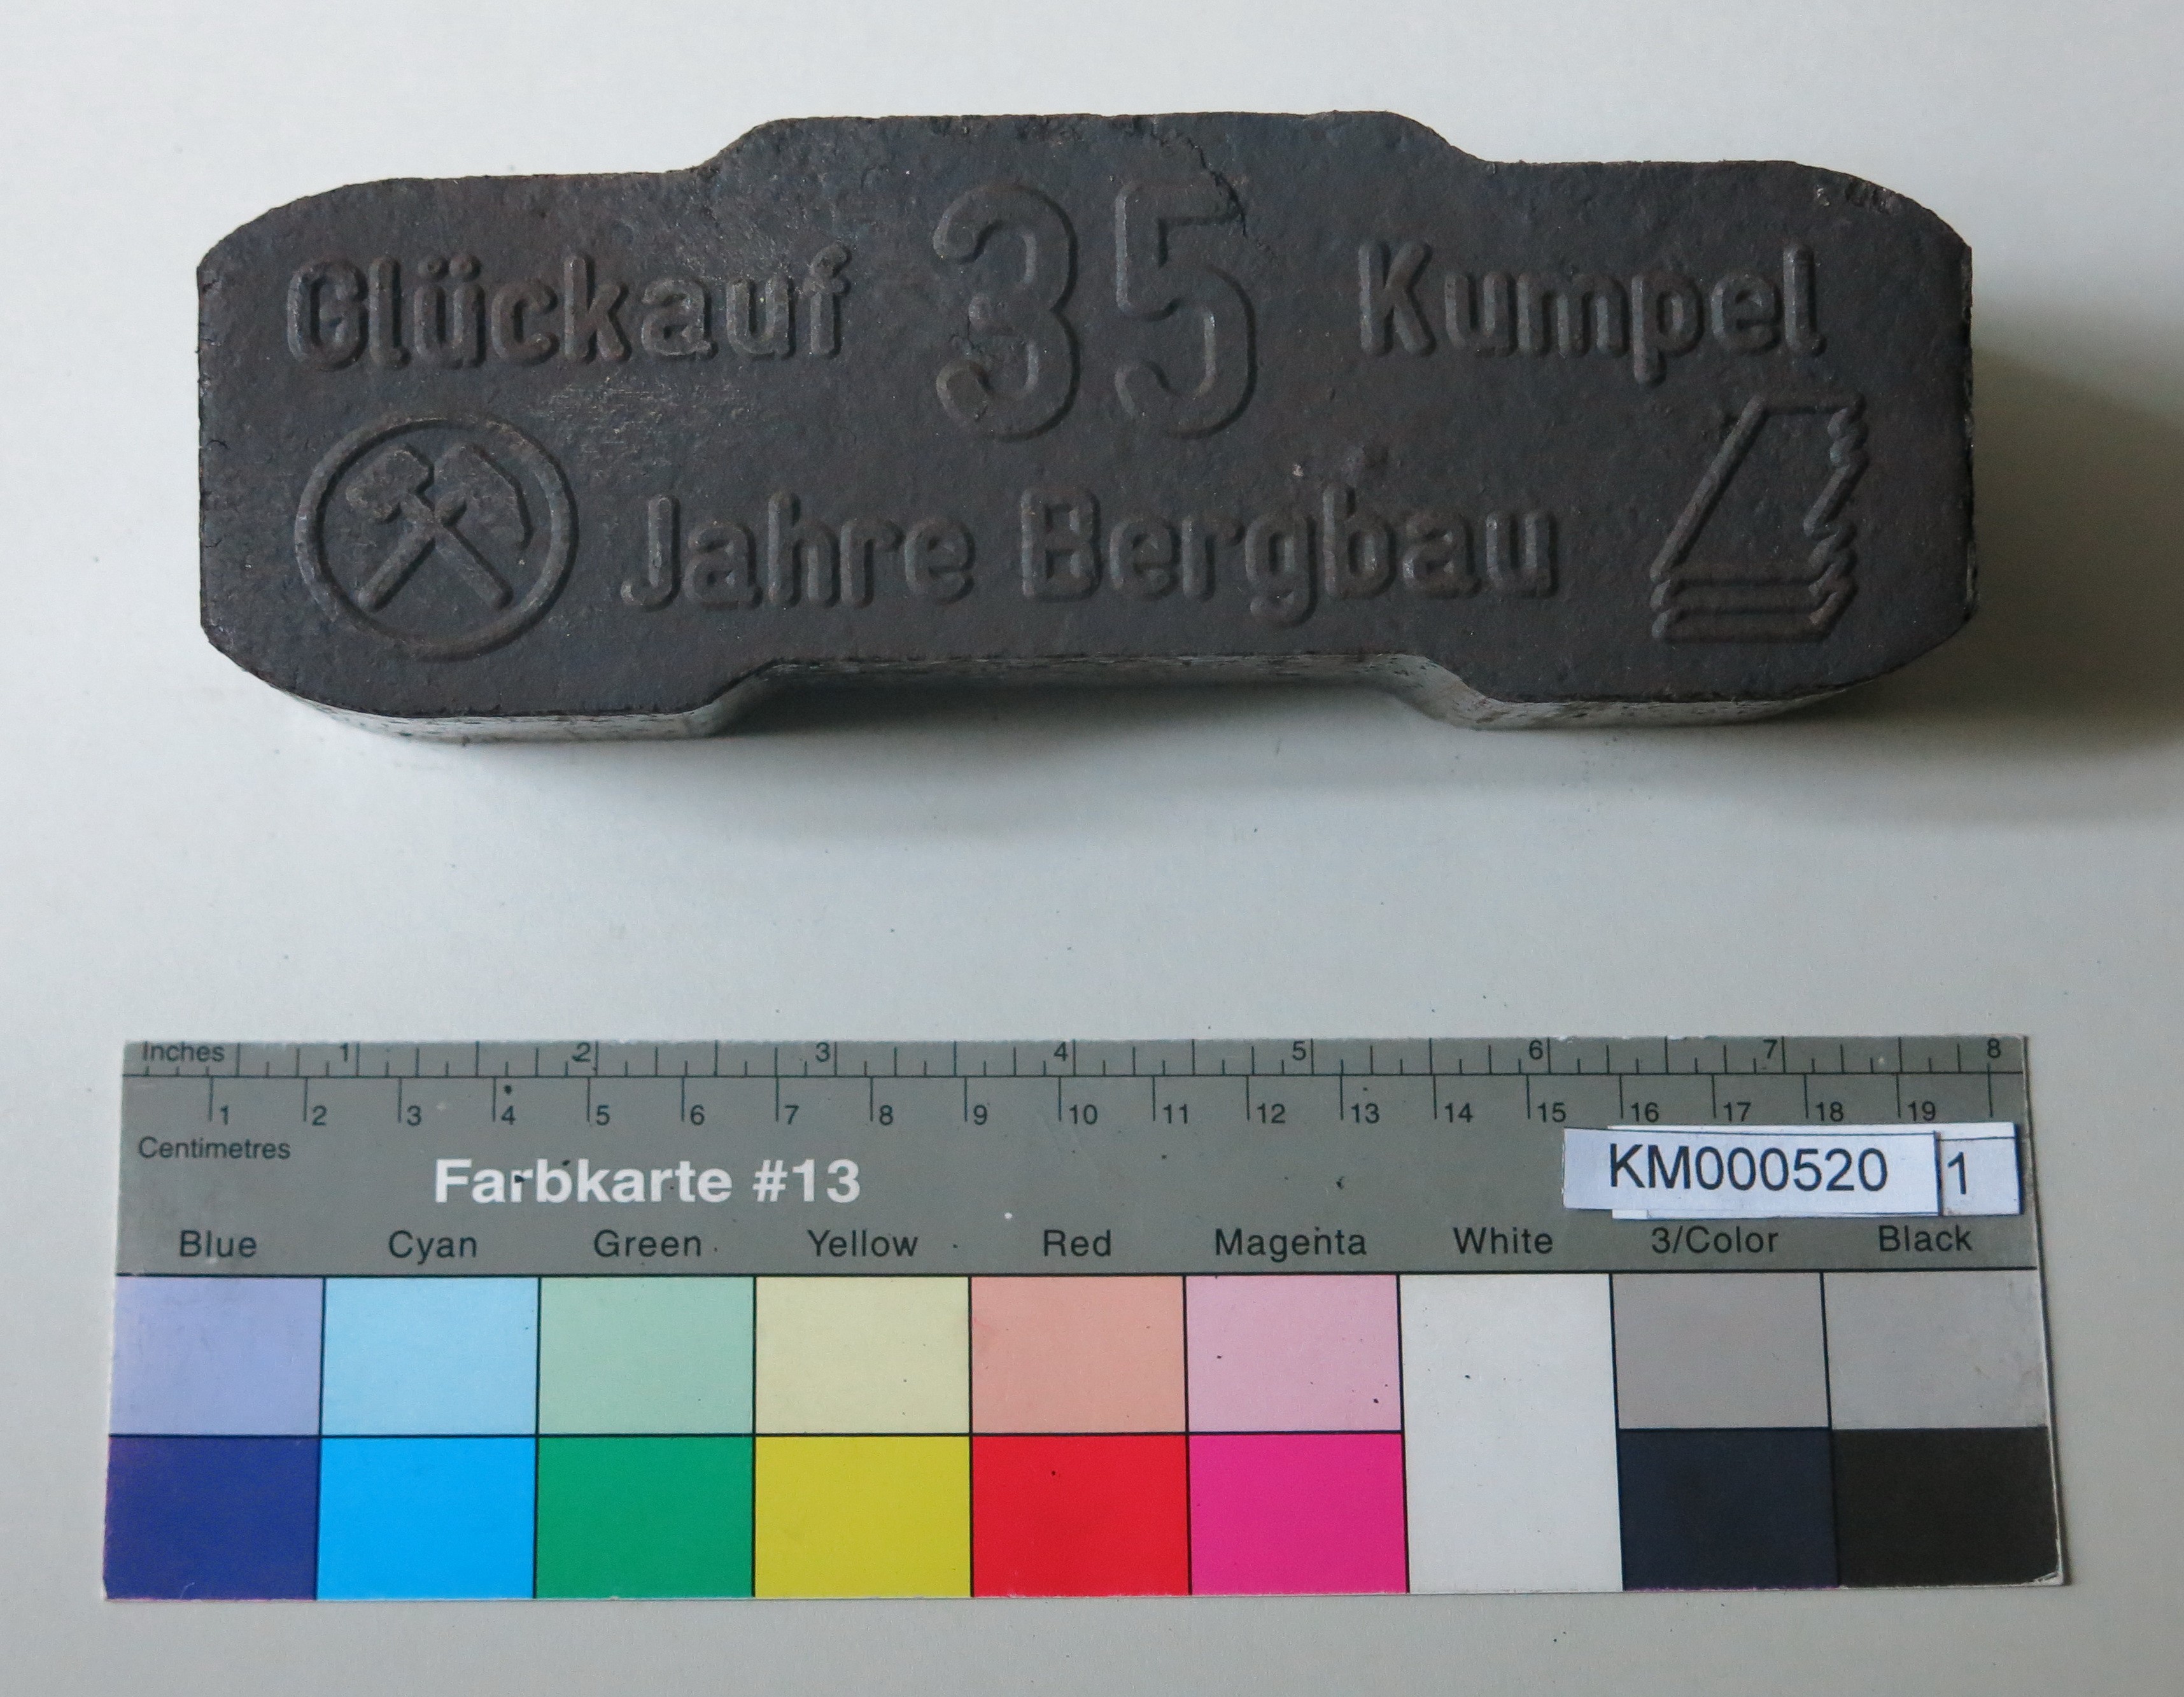 Zierbrikett "Glückauf Kumpel 35 Jahre Bergbau" (Energiefabrik Knappenrode CC BY-SA)